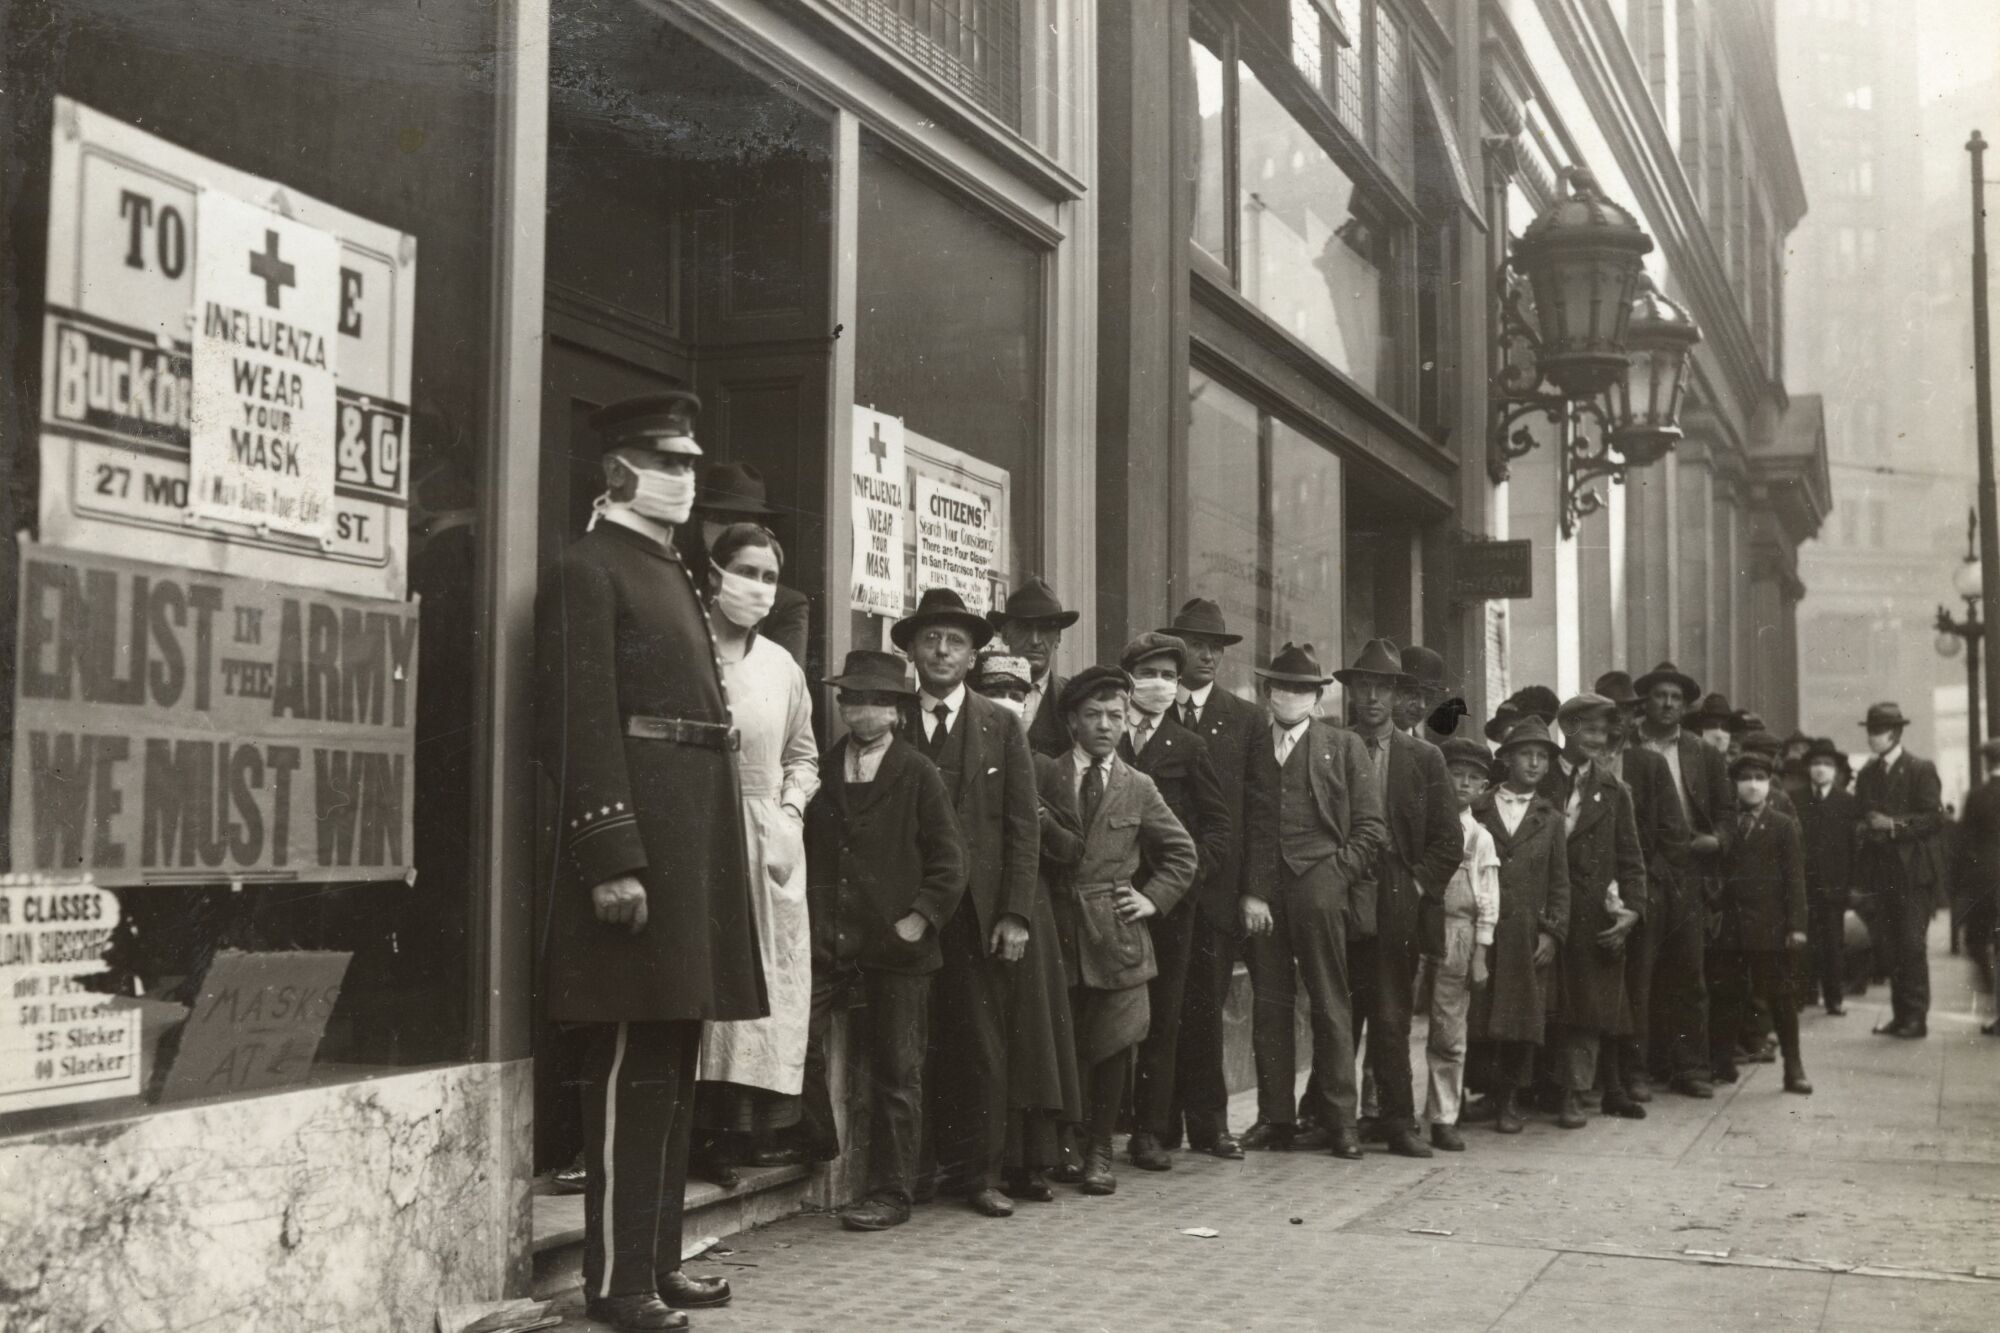 People wait in line to get flu masks on Montgomery Street in San Francisco in 1918.